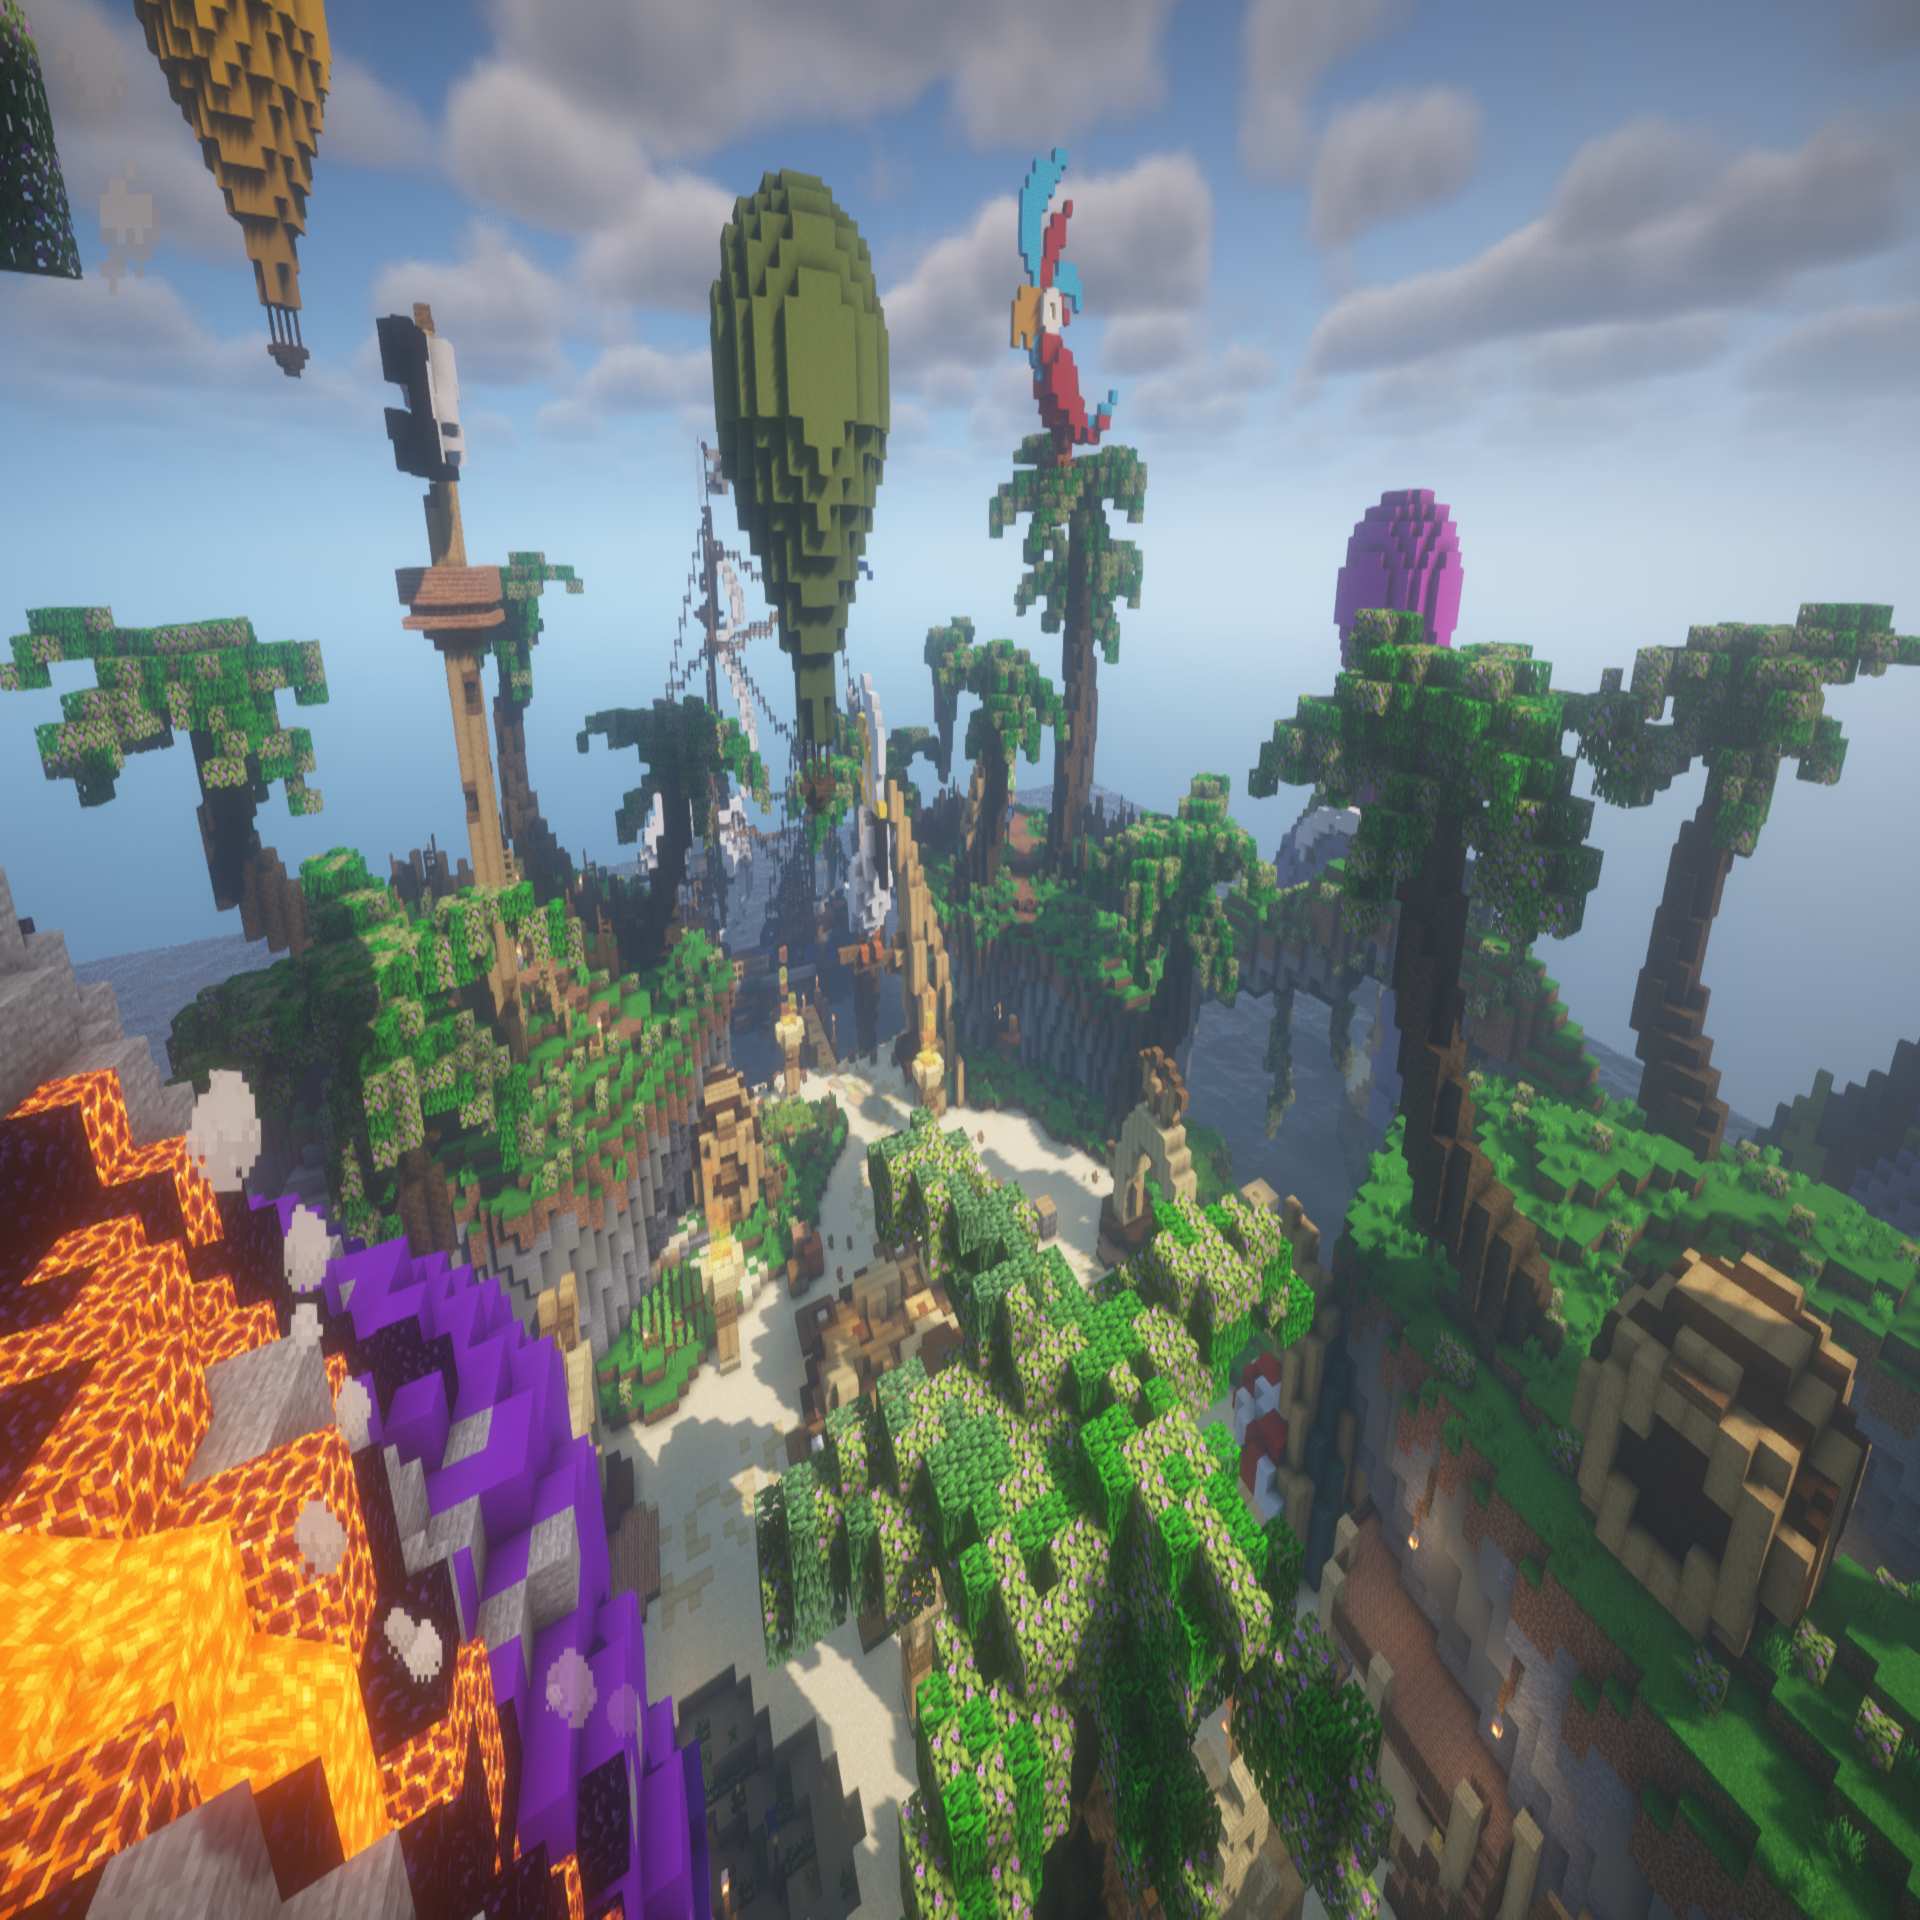 Pirate Island - A beautiful FREE SPAWN-HUB - Minecraft Worlds - CurseForge